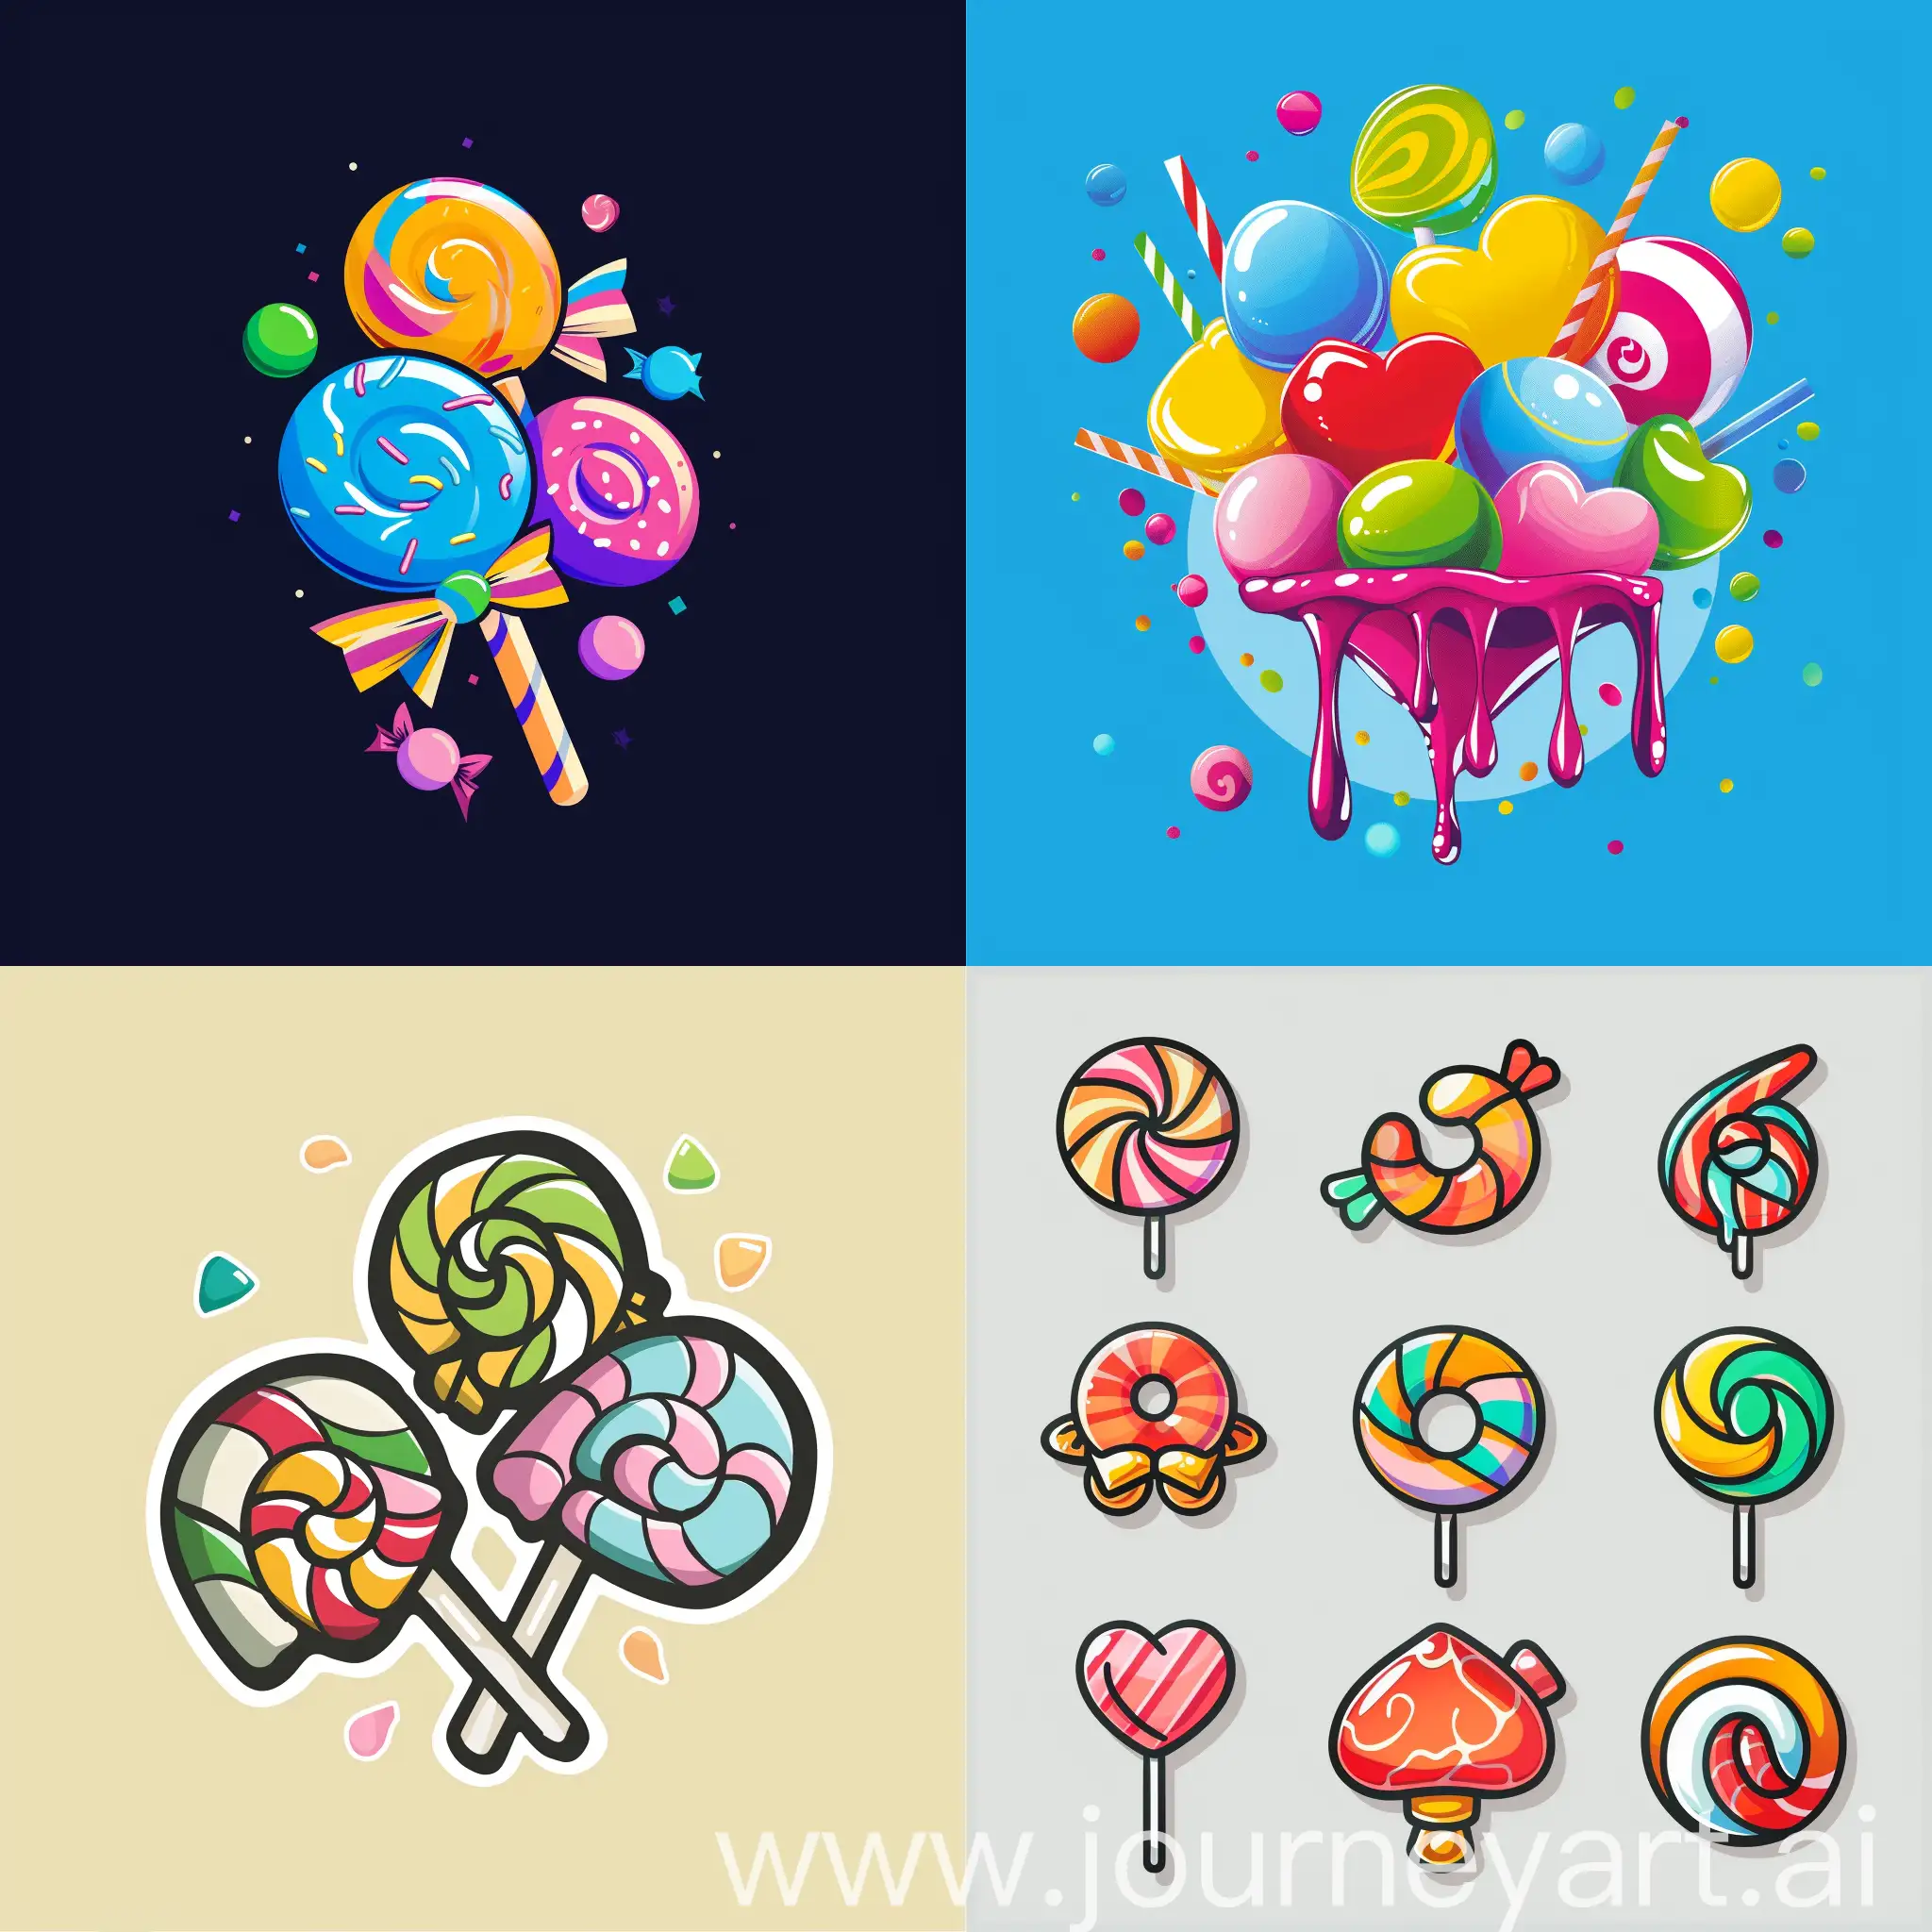 candy and lollypop logo design, best of adobe illustrator